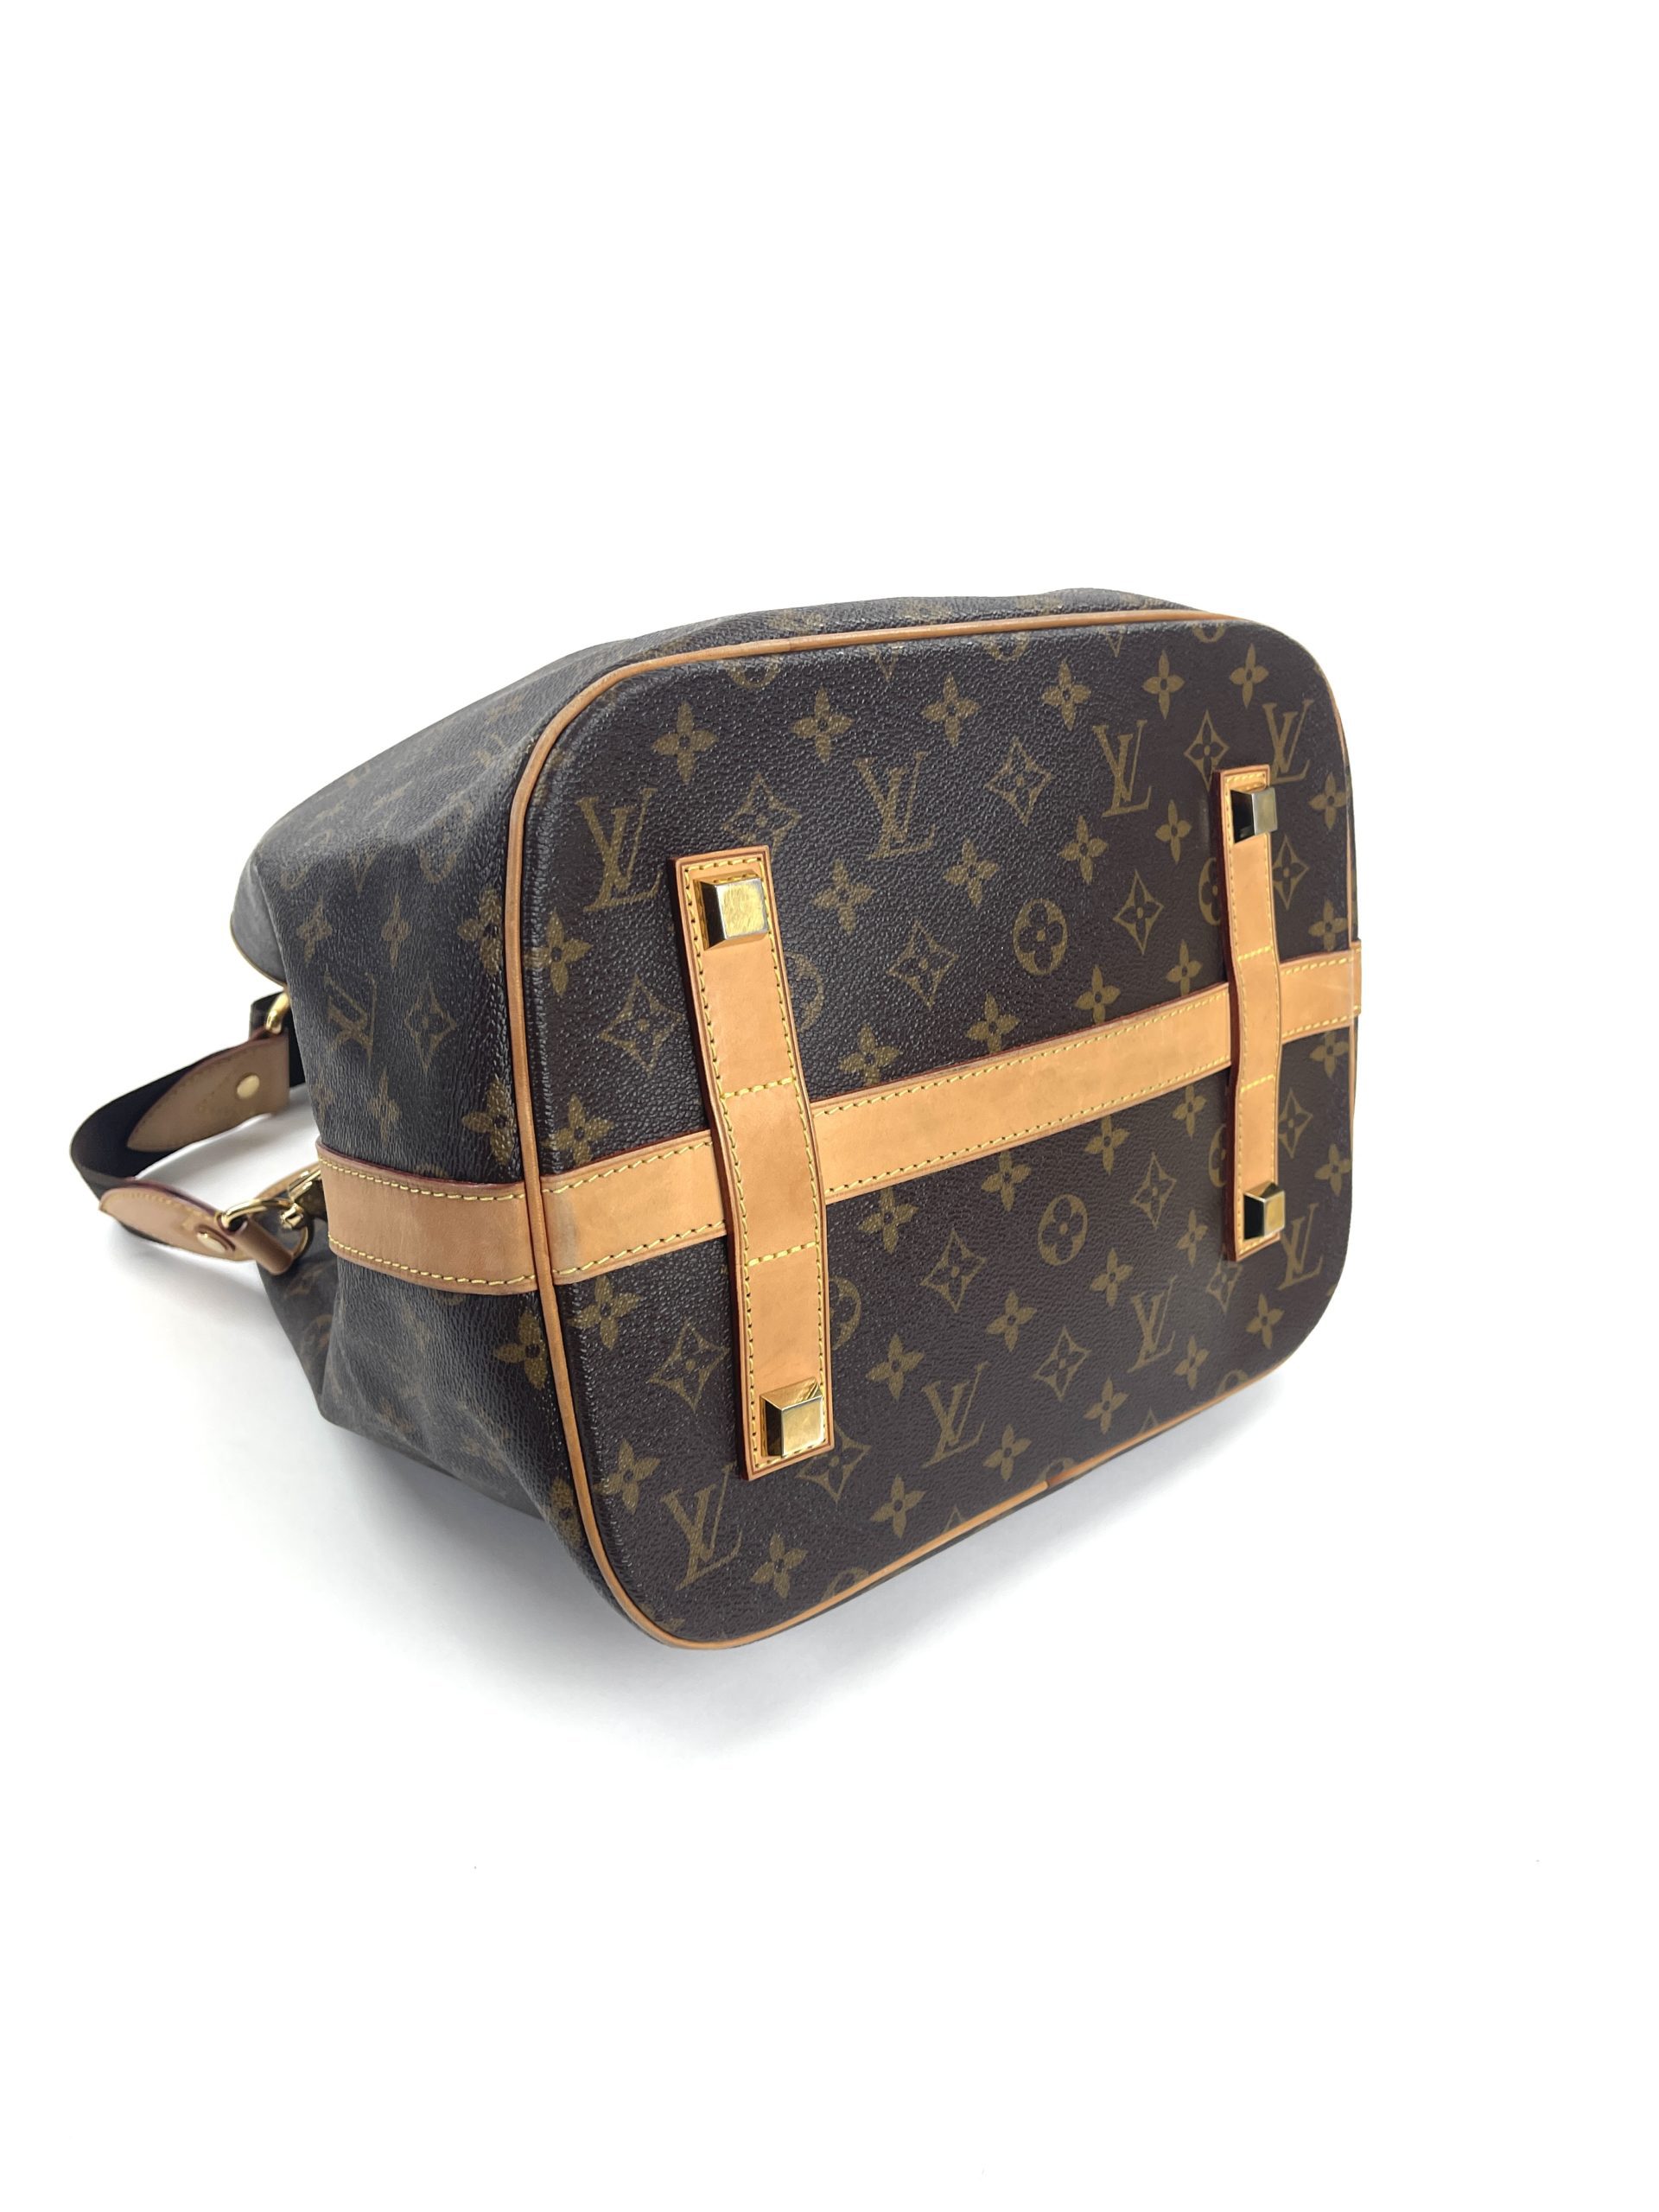 Louis Vuitton Monogram Eden Noe 2 Way Bag Limited Edition - A